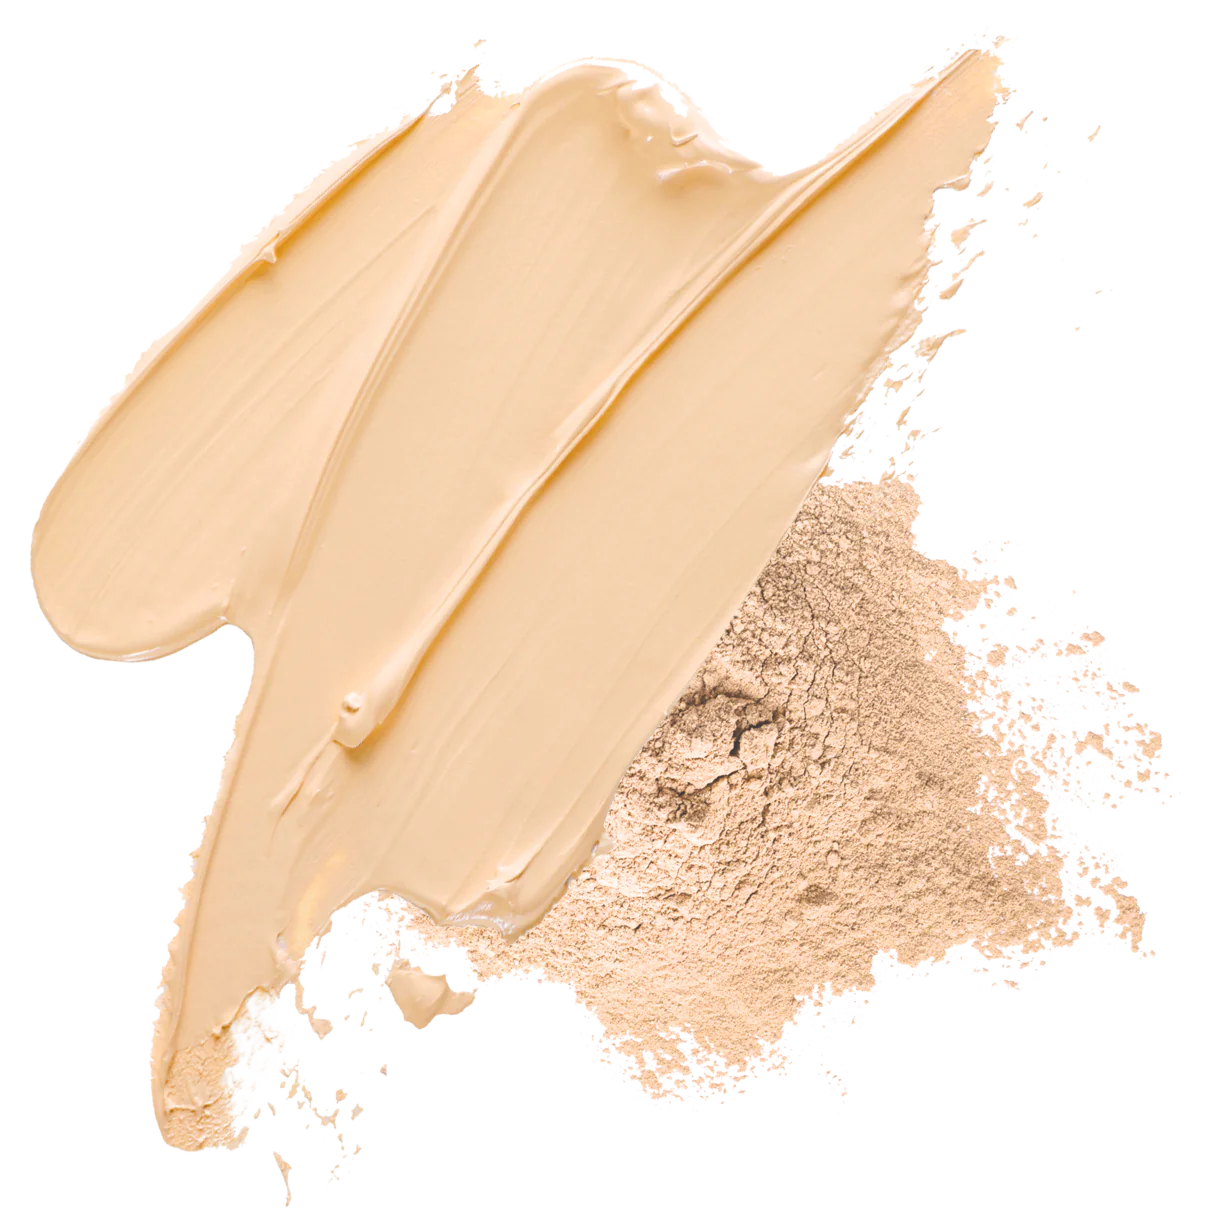 Skin bloom cream to powder compact